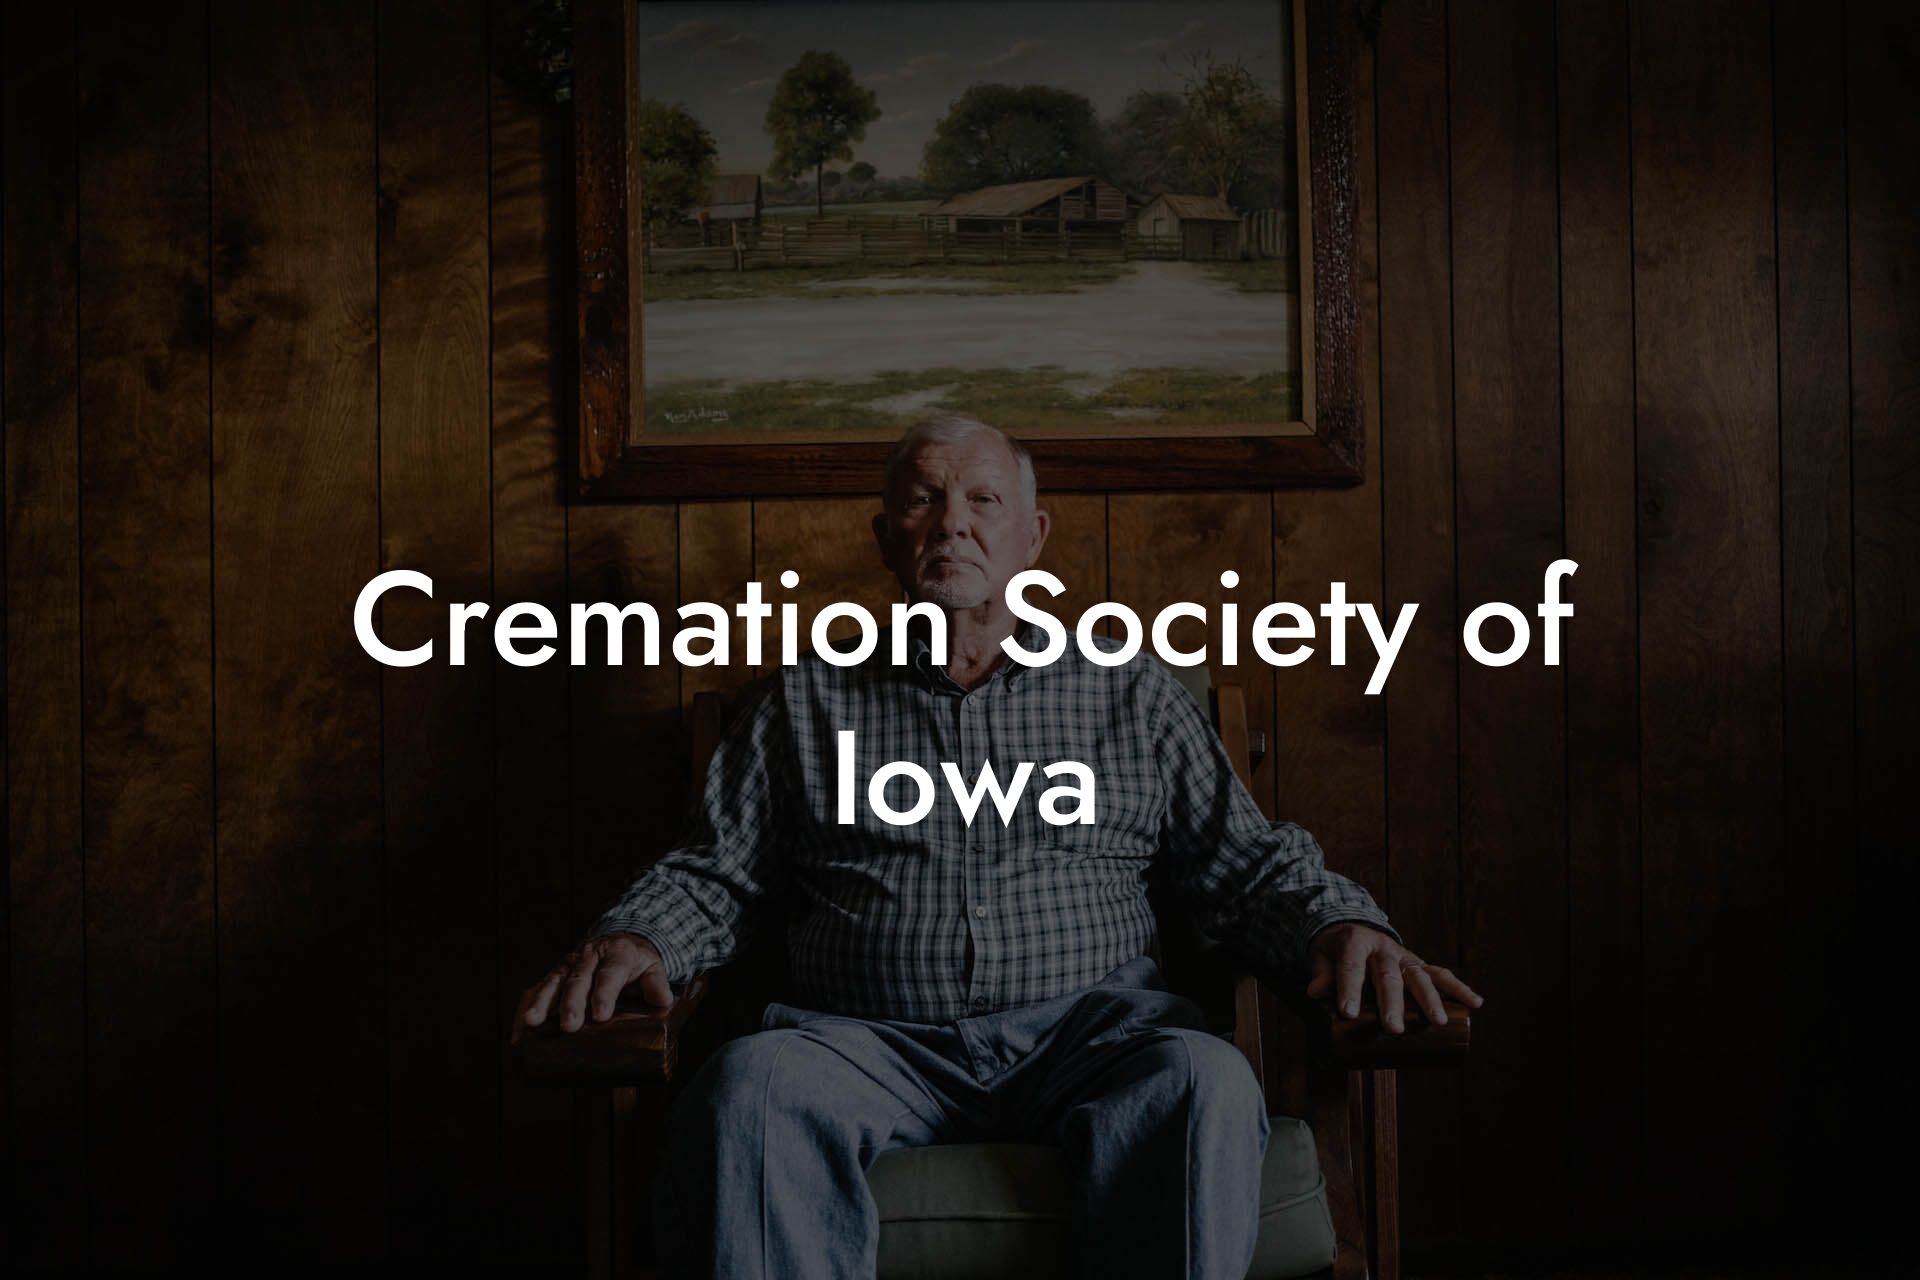 Cremation Society of Iowa